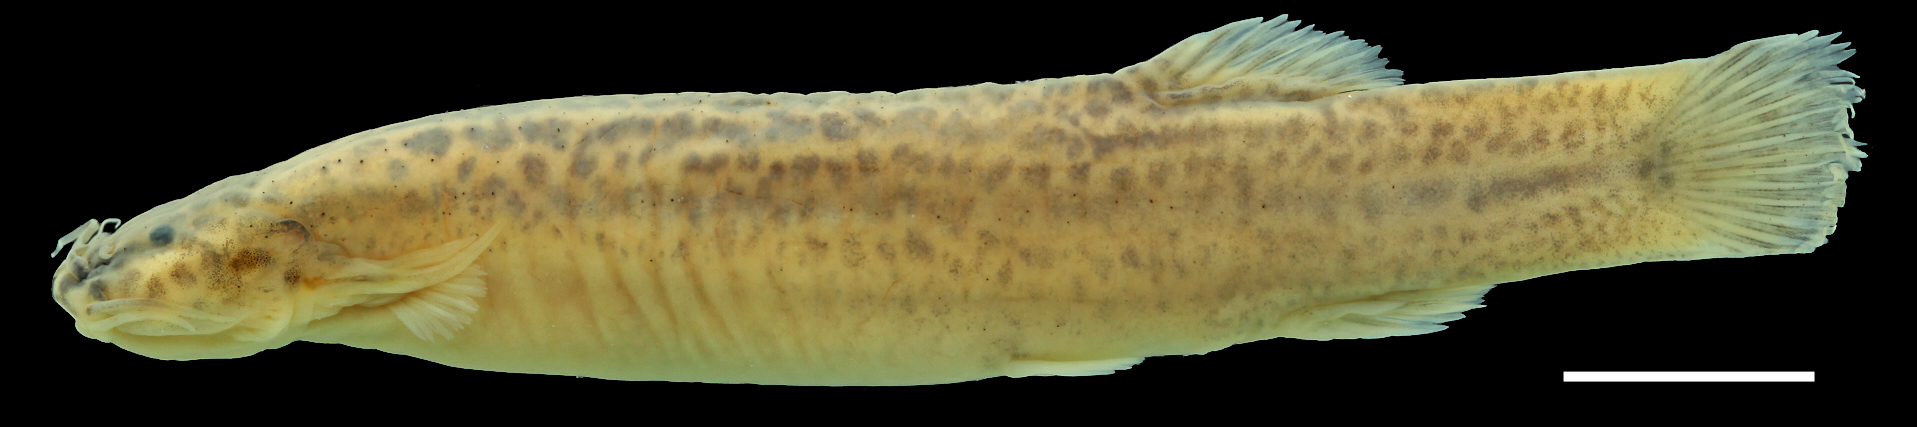 Paratype of <em>Trichomycterus ruitoquensis</em>, IAvH-P-4342_Lateral, 63.8 mm SL (scale bar = 1 cm). Photograph by C. DoNascimiento